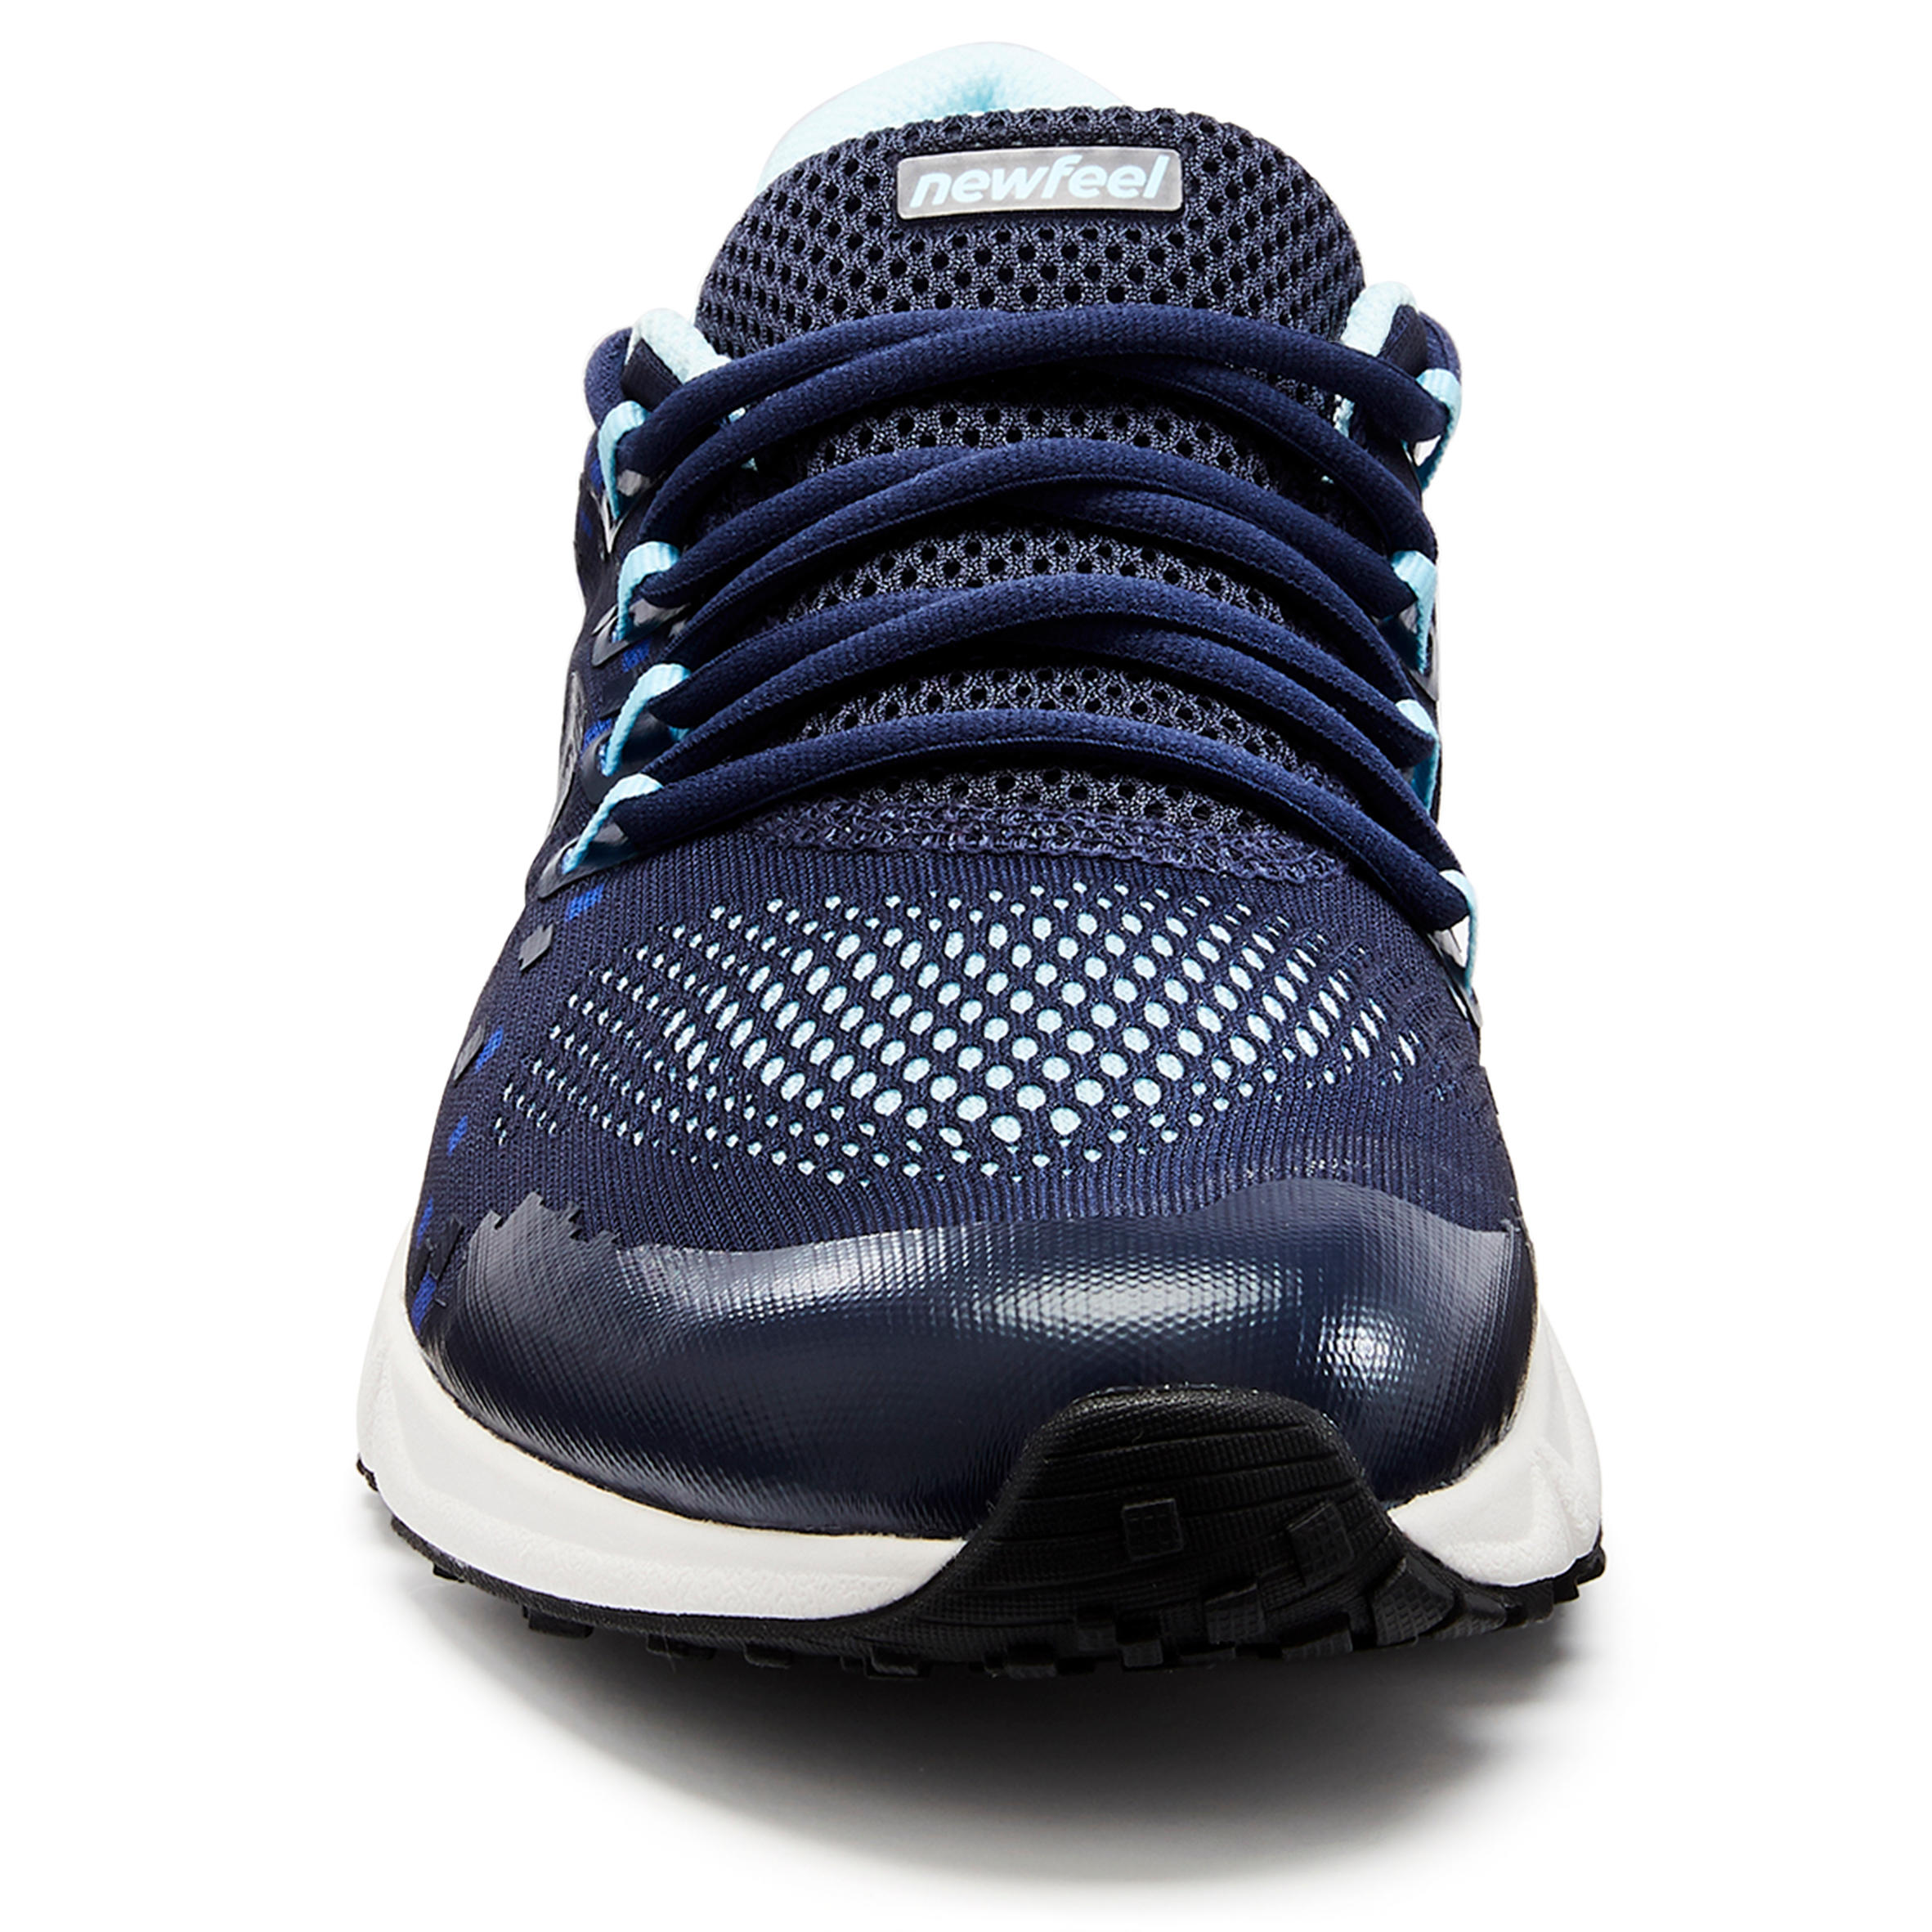 RW 500 fitness walking shoes - blue 2/9